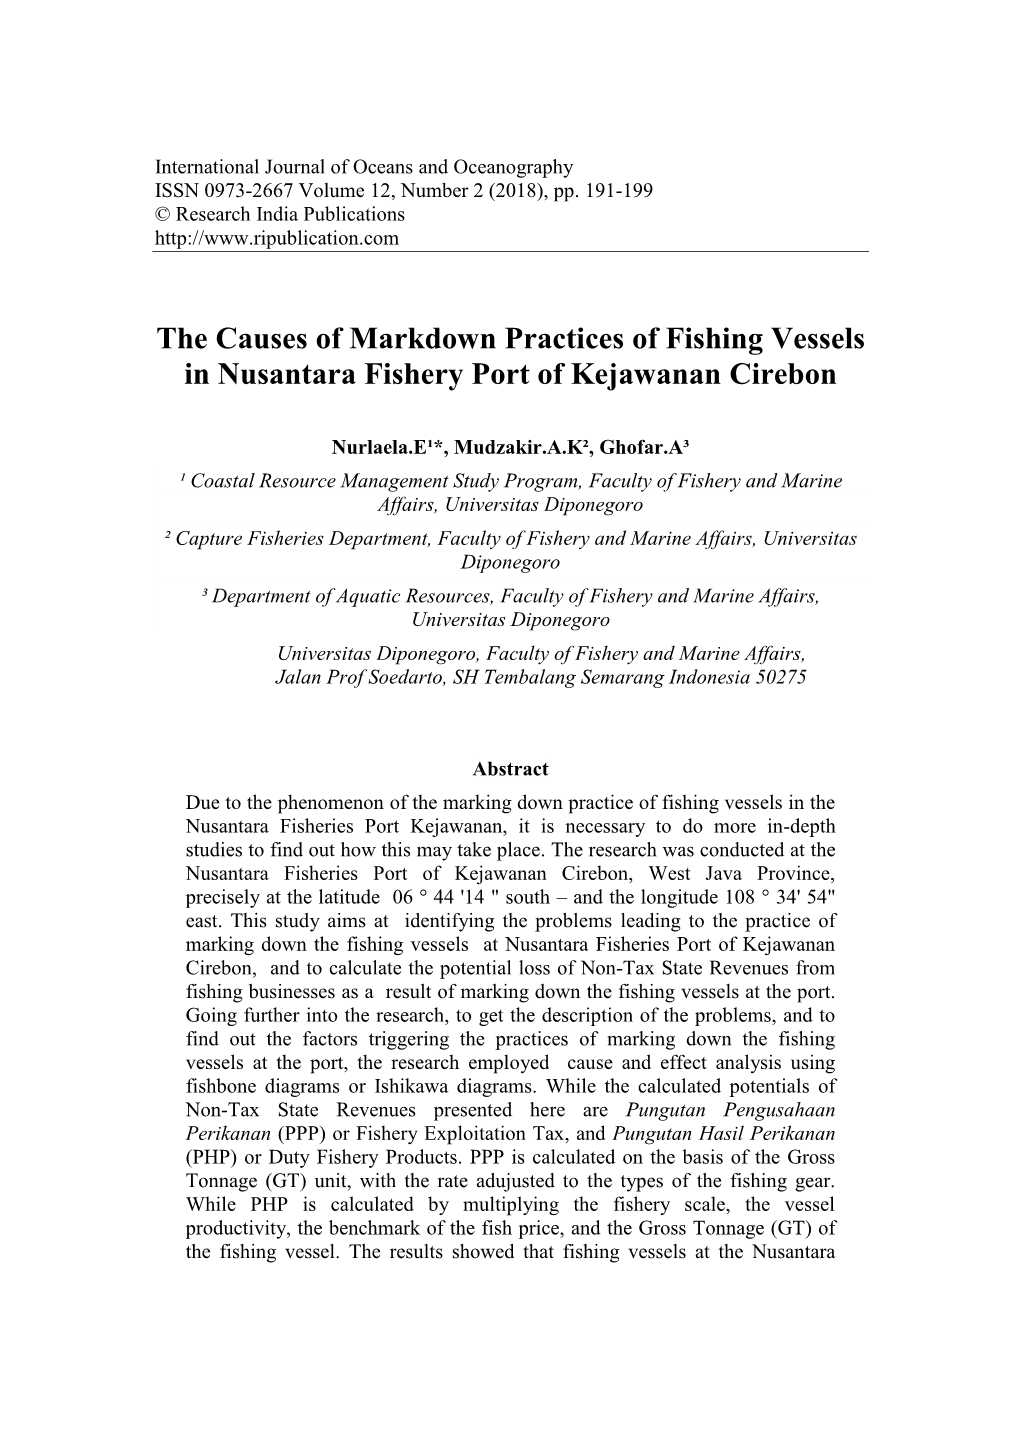 The Causes of Markdown Practices of Fishing Vessels in Nusantara Fishery Port of Kejawanan Cirebon